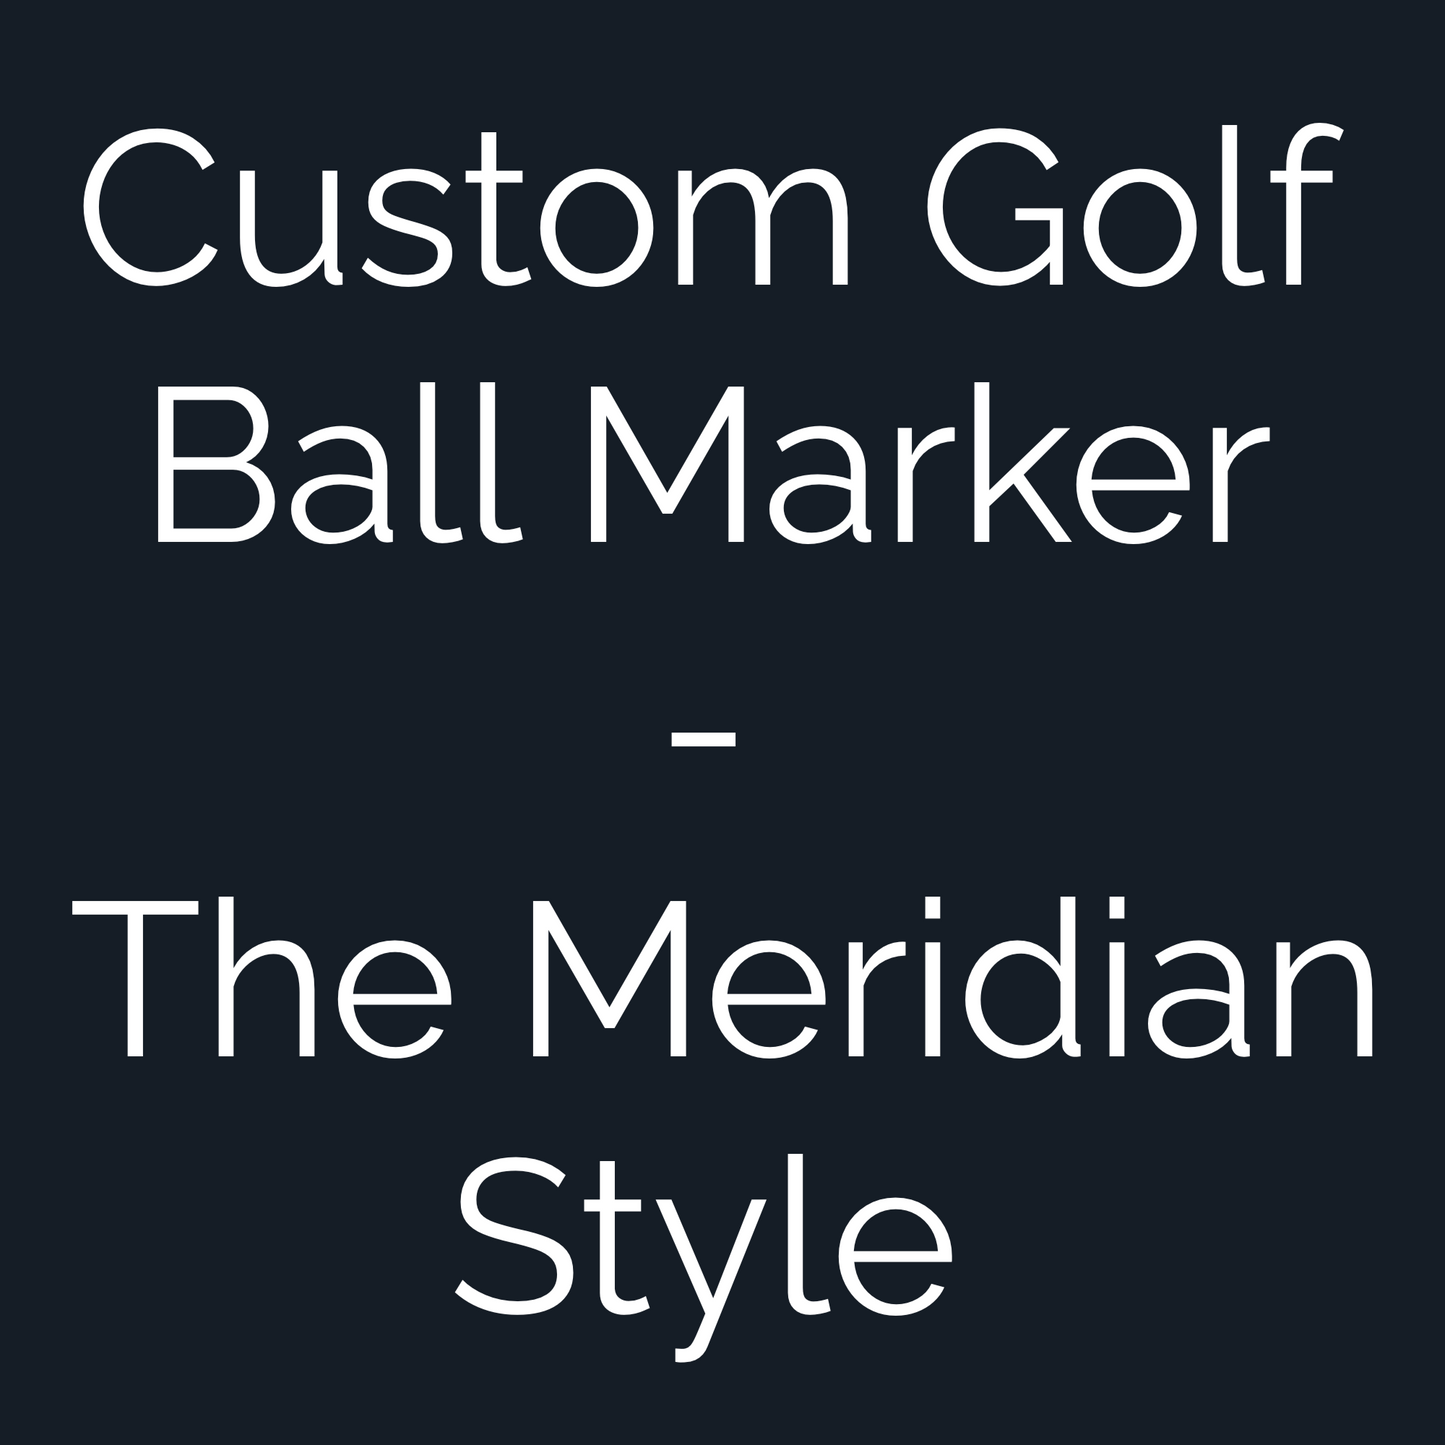 Custom Golf Ball Marker - The Meridian Style